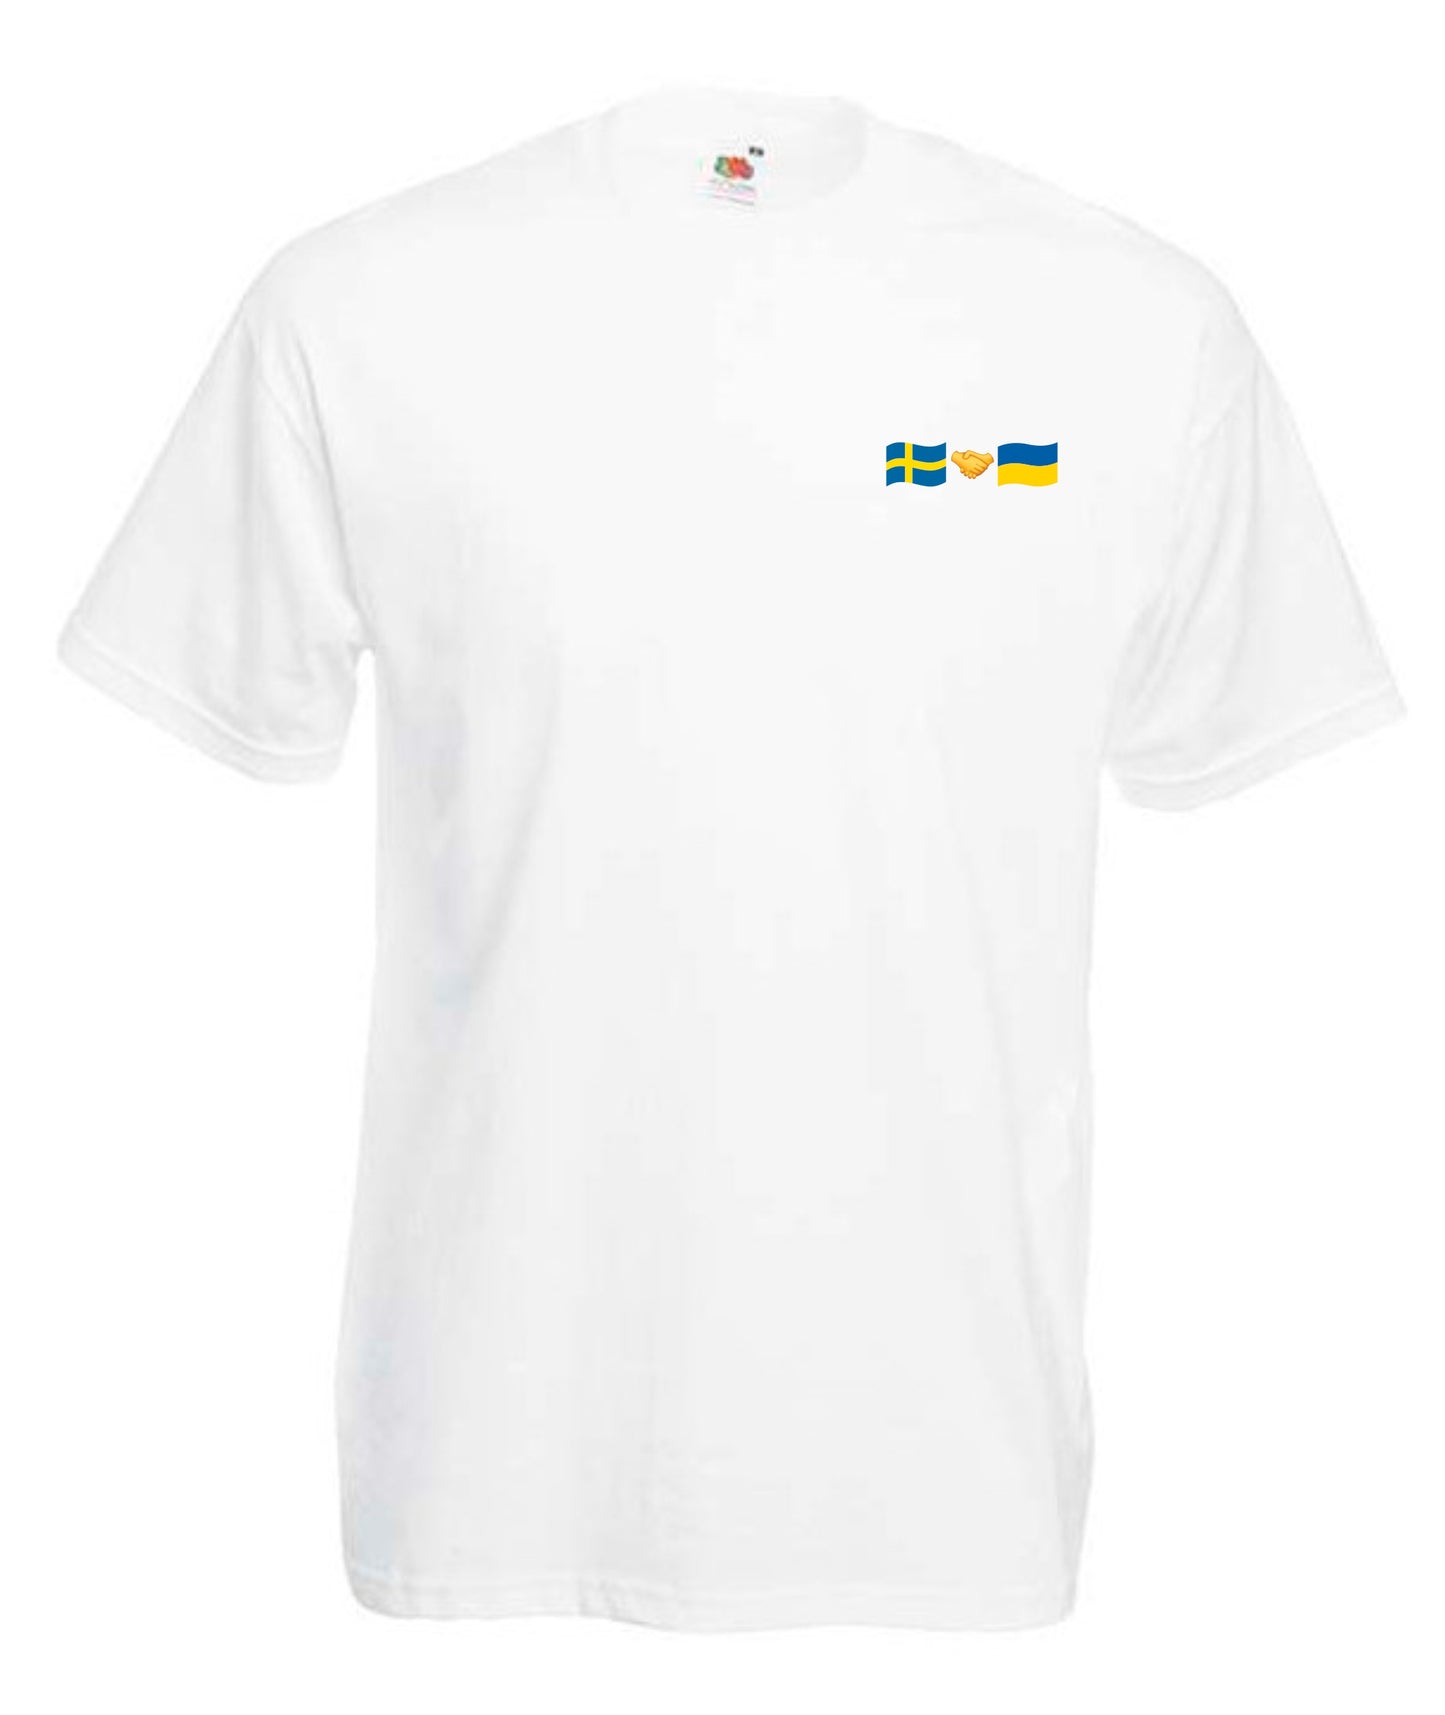 Т-shirt Sweden + Ukraine (small logo)